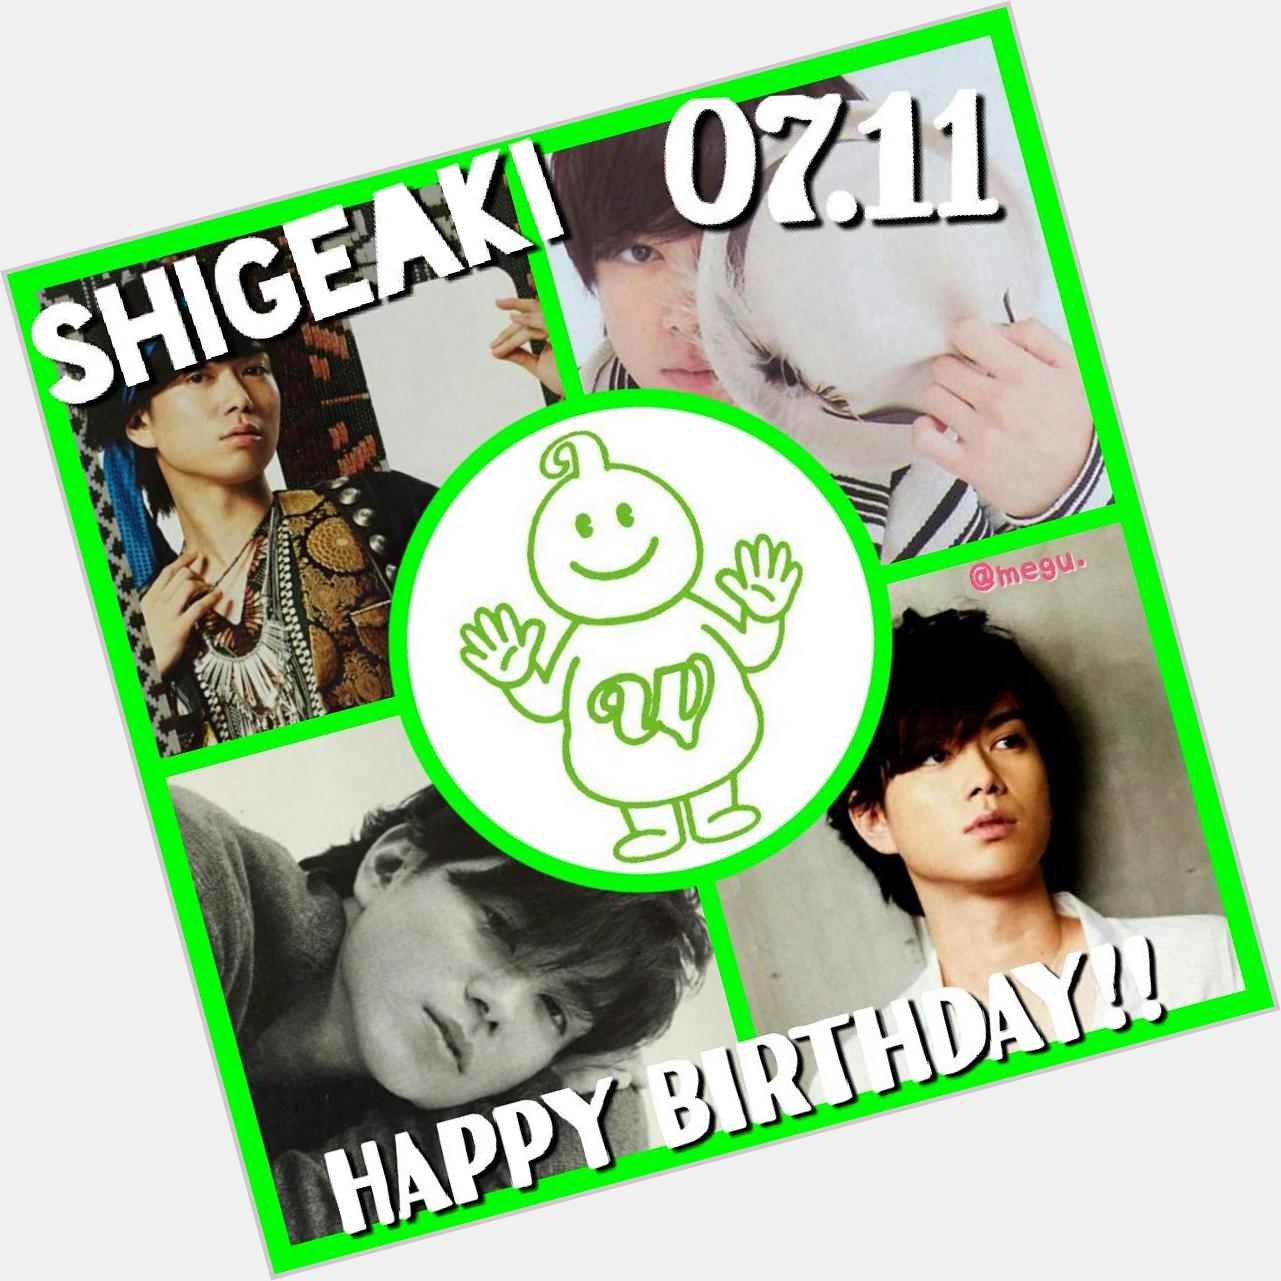 1987.07.11  2015.07.11
SHIGEAKI KATO
Happy Birthday *: !!!!  28                           